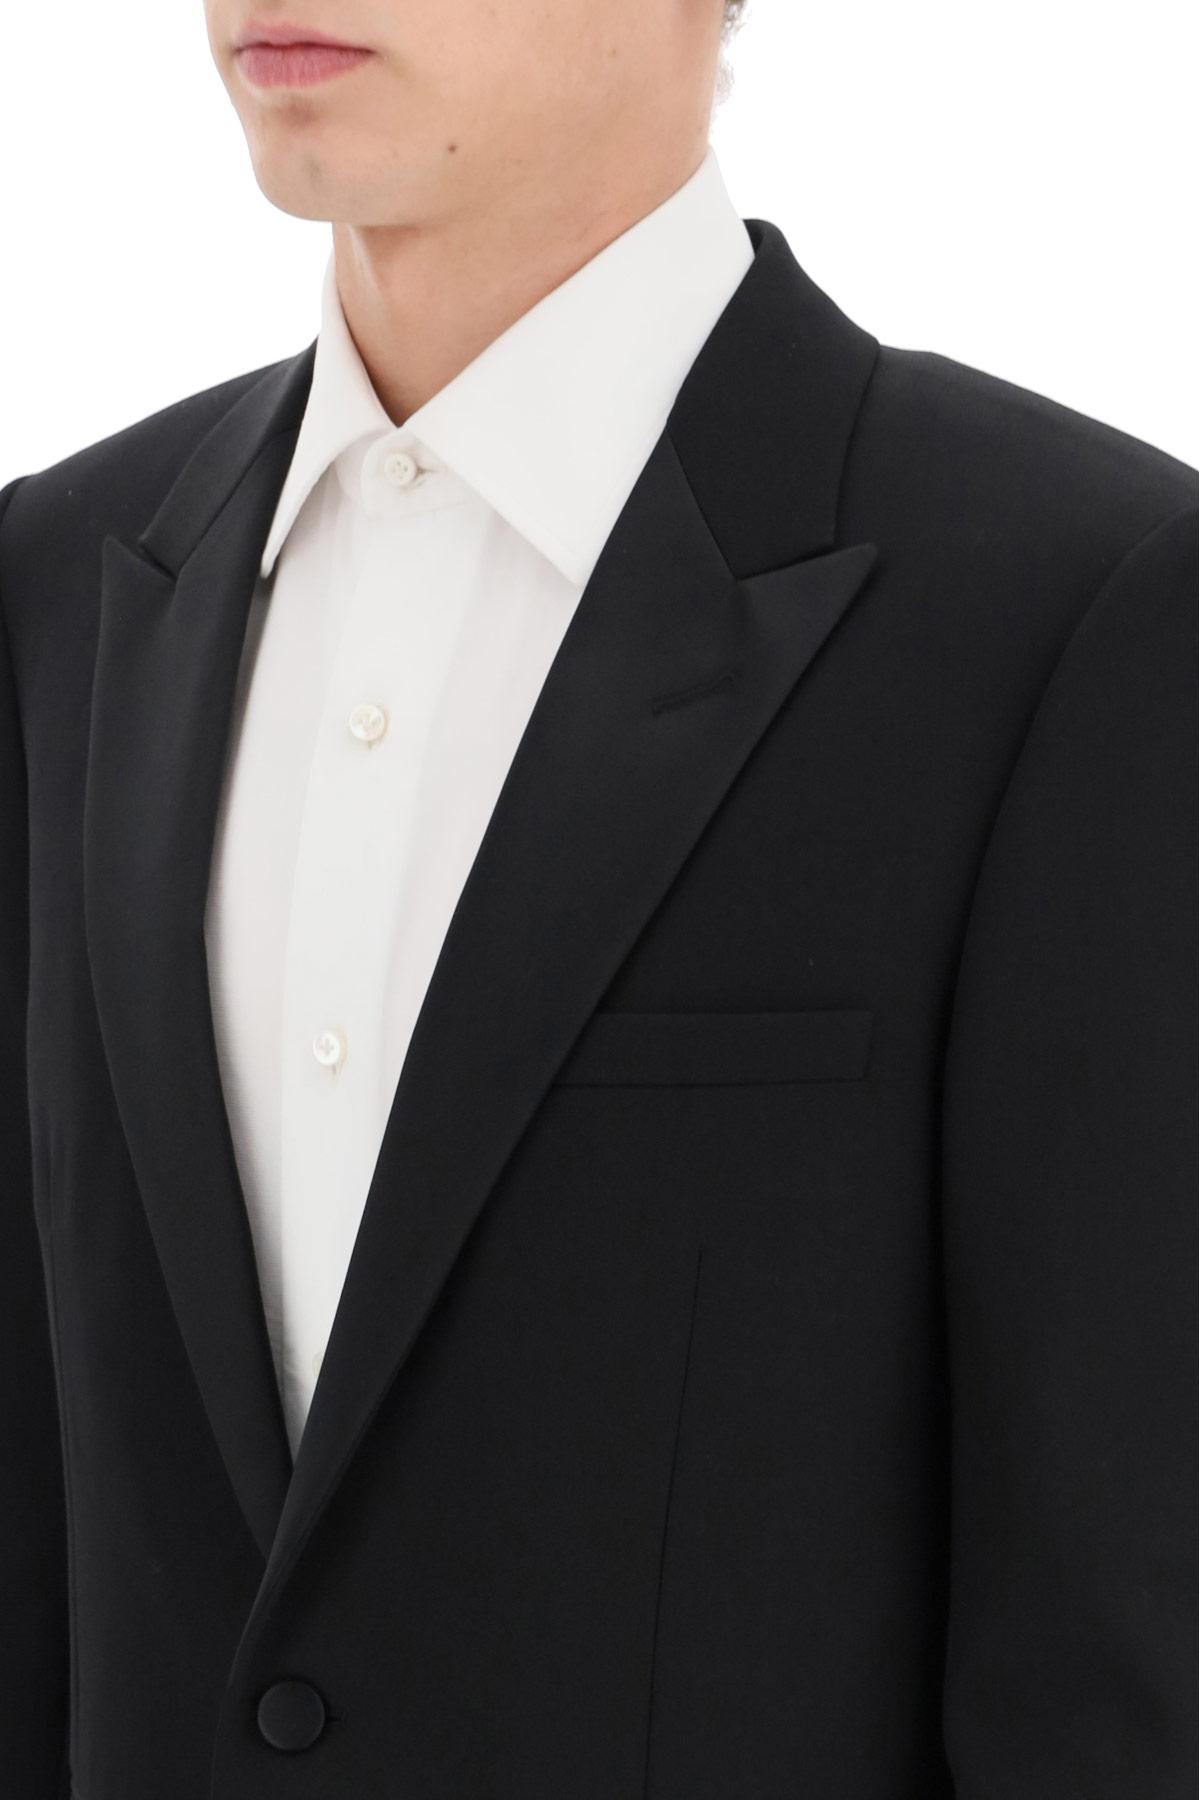 Saint Laurent Tuxedo Suit in Black for Men - Save 53% - Lyst